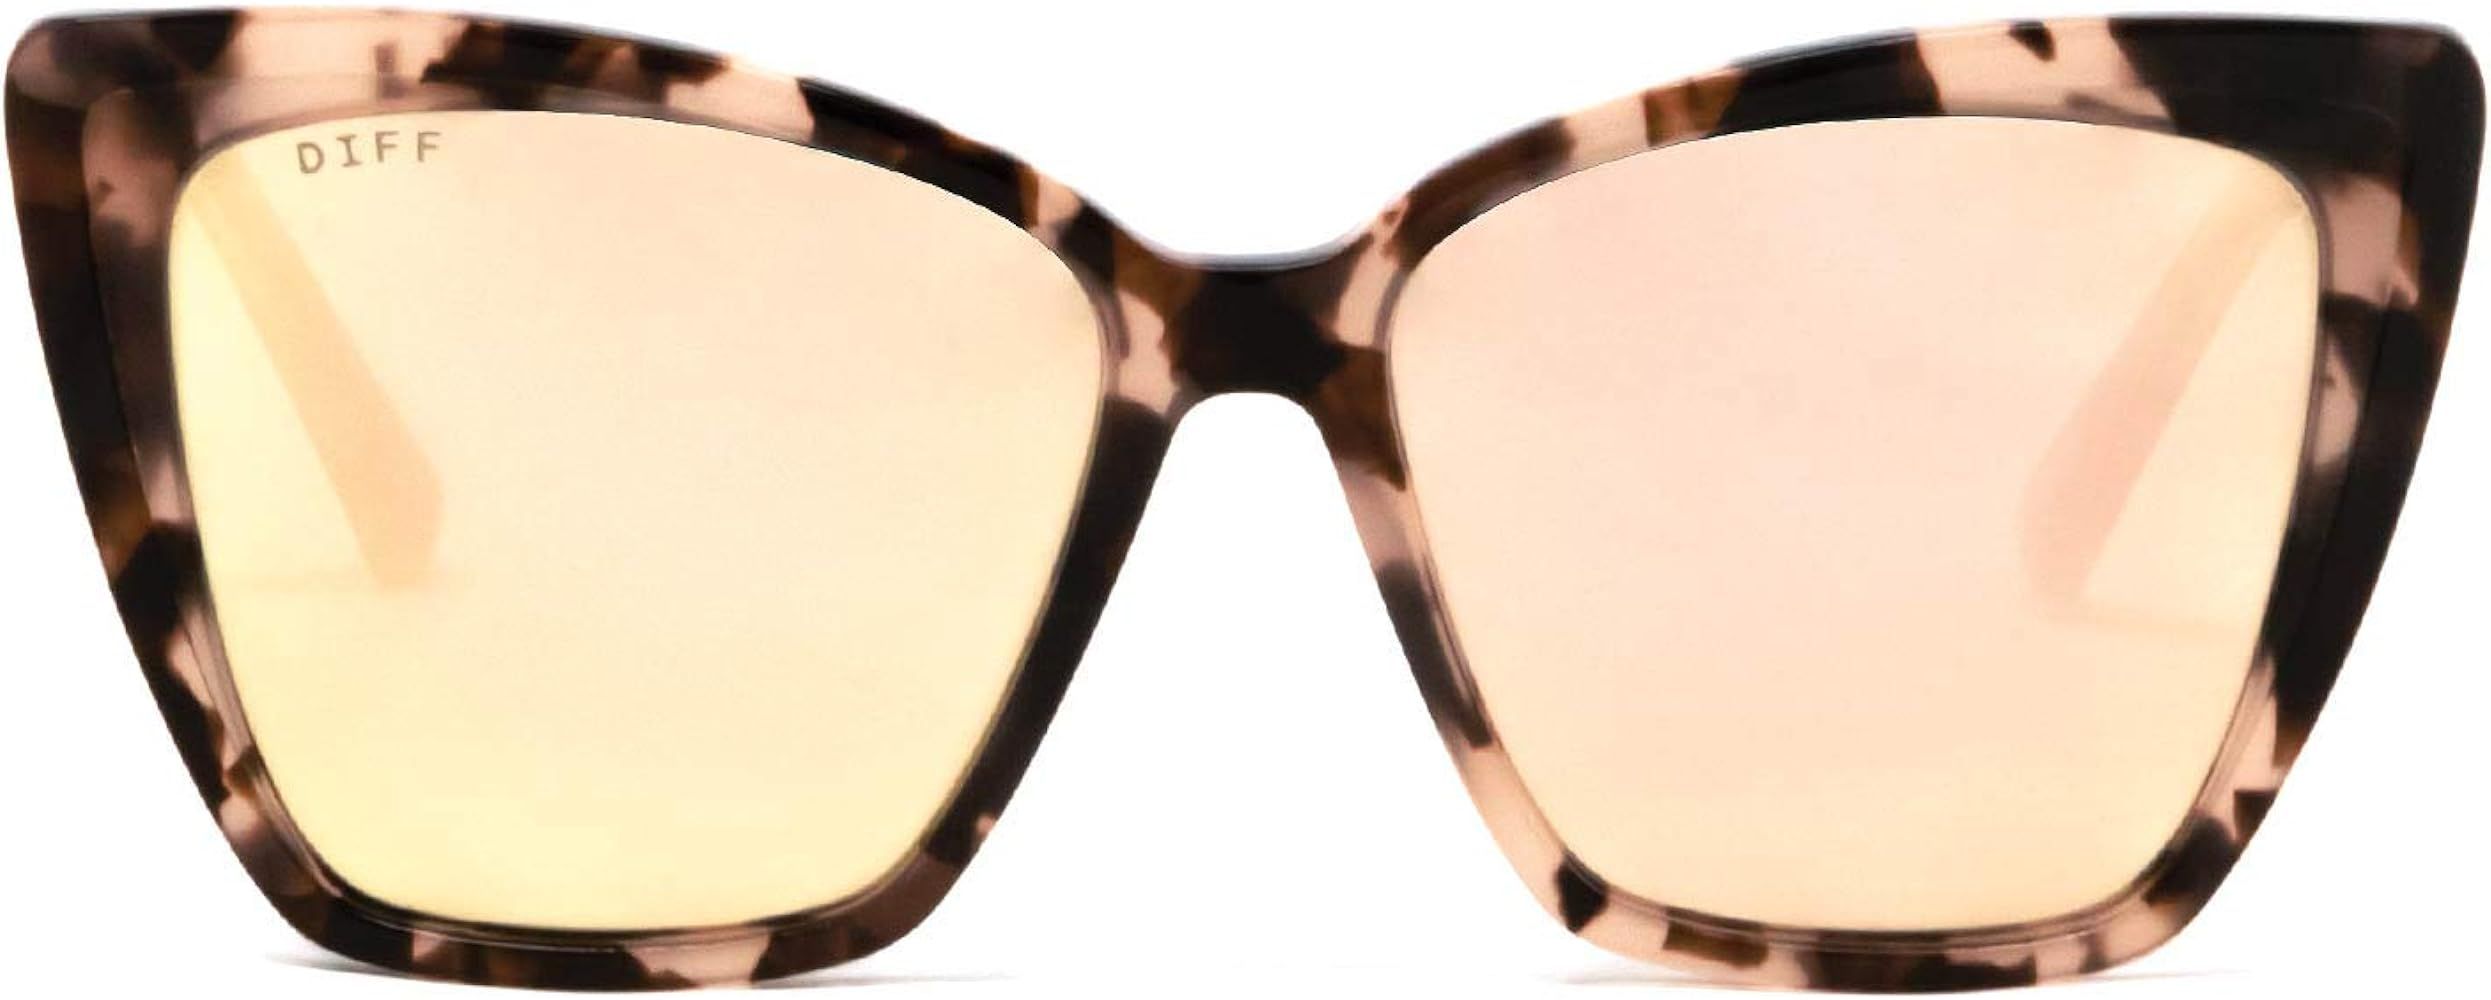 DIFF Eyewear - Becky II - Designer Cat Eye Sunglasses for Women - 100% UVA/UVB | Amazon (US)